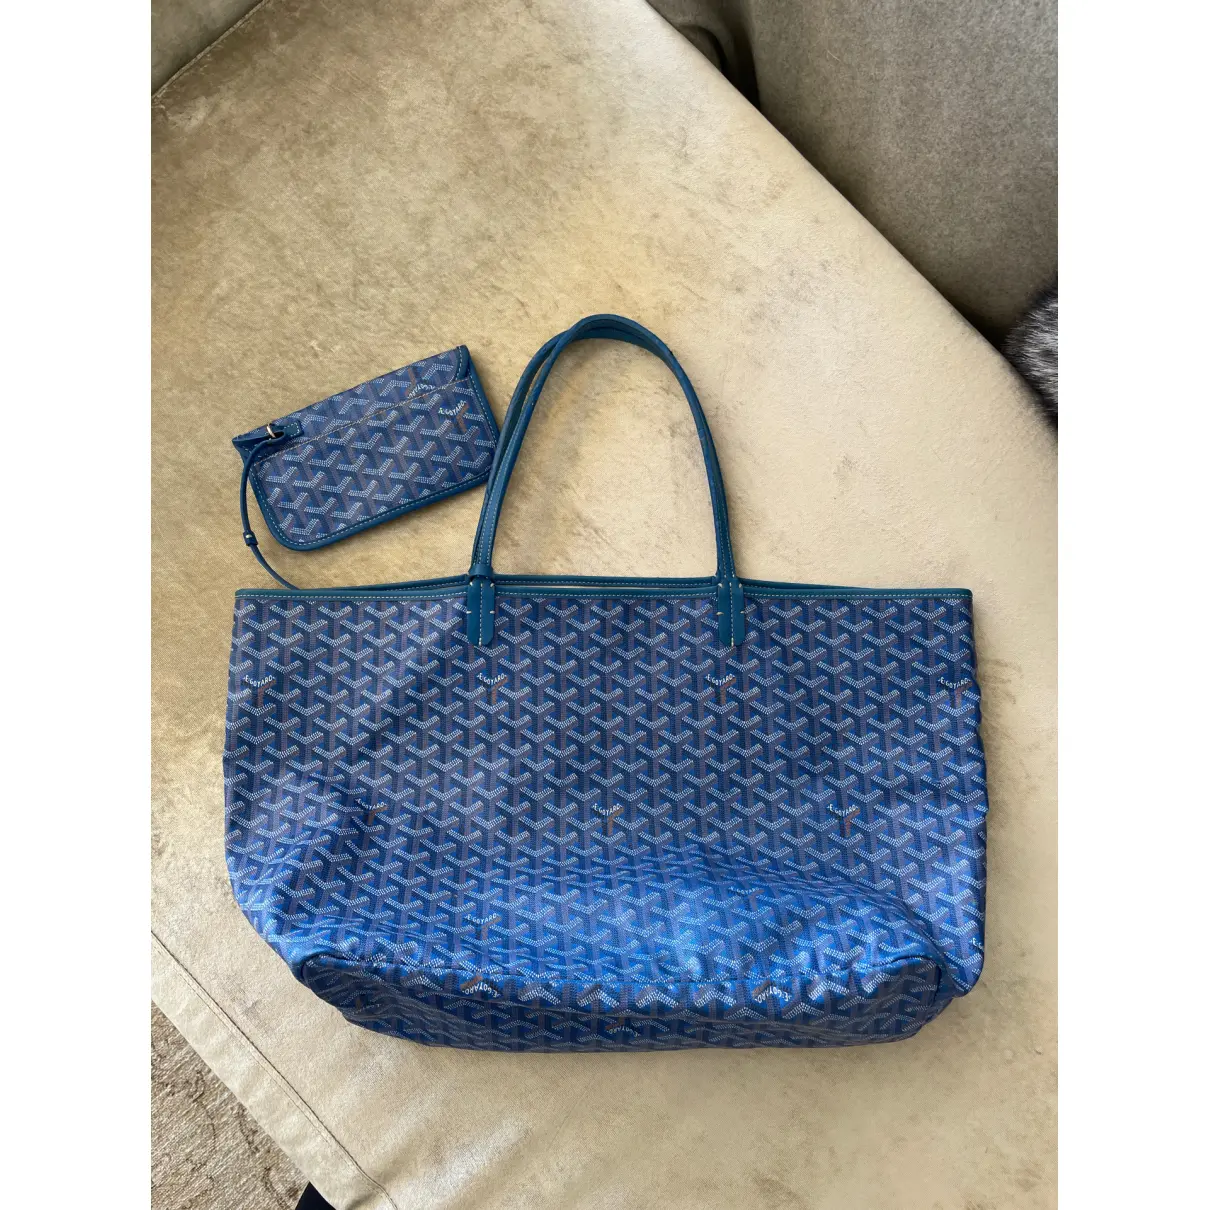 Buy Goyard Saint-Louis cloth handbag online